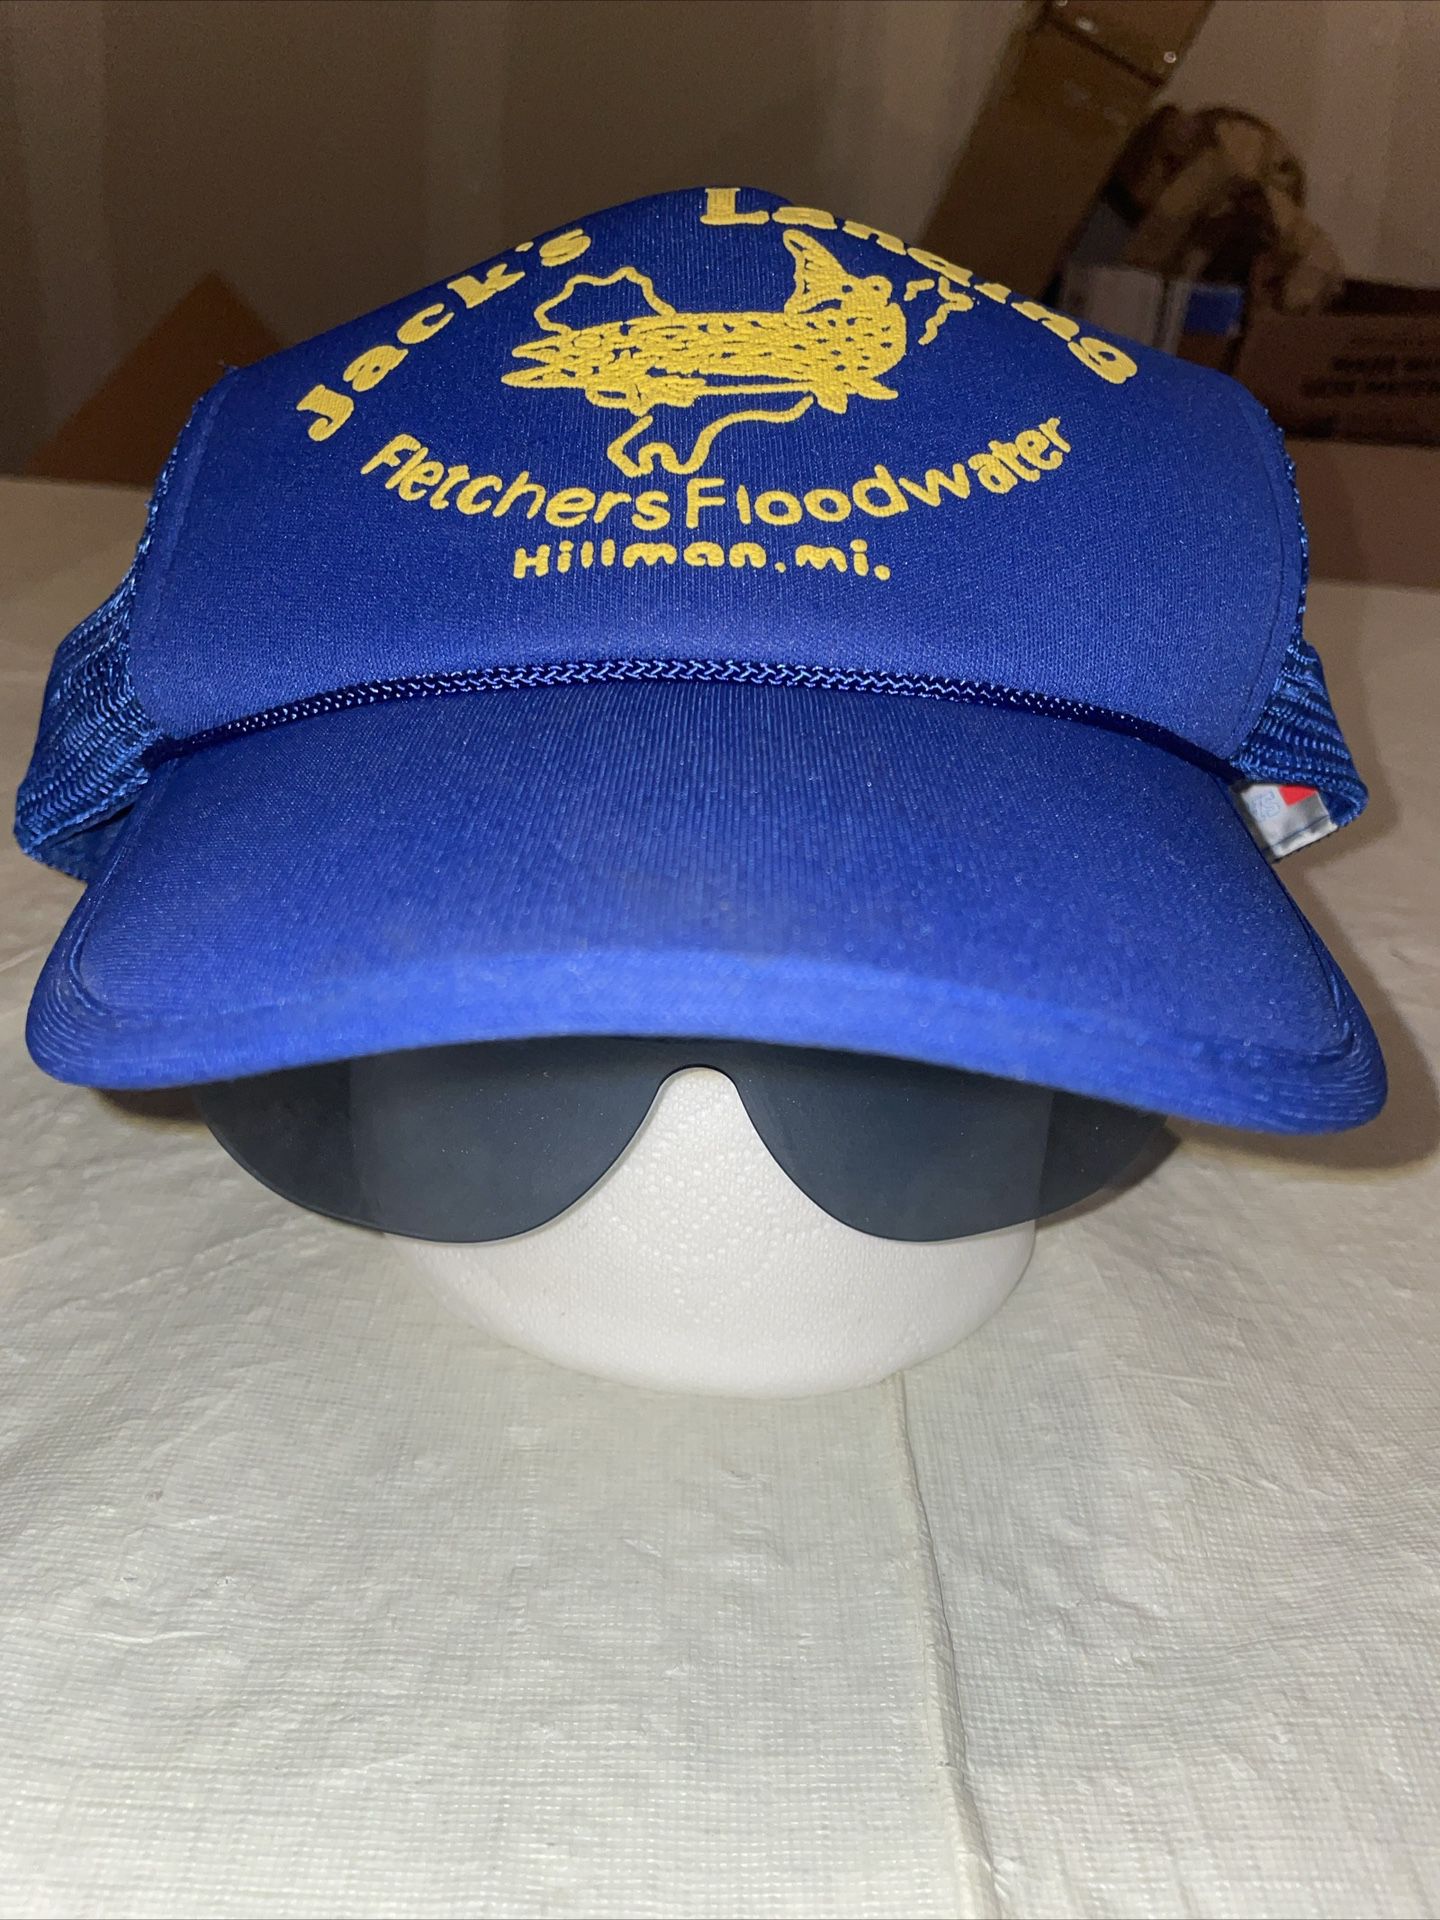 Jack’s Landing Fletcher’s floodwater Michigan Sunglasses Snapback Trucker Hat